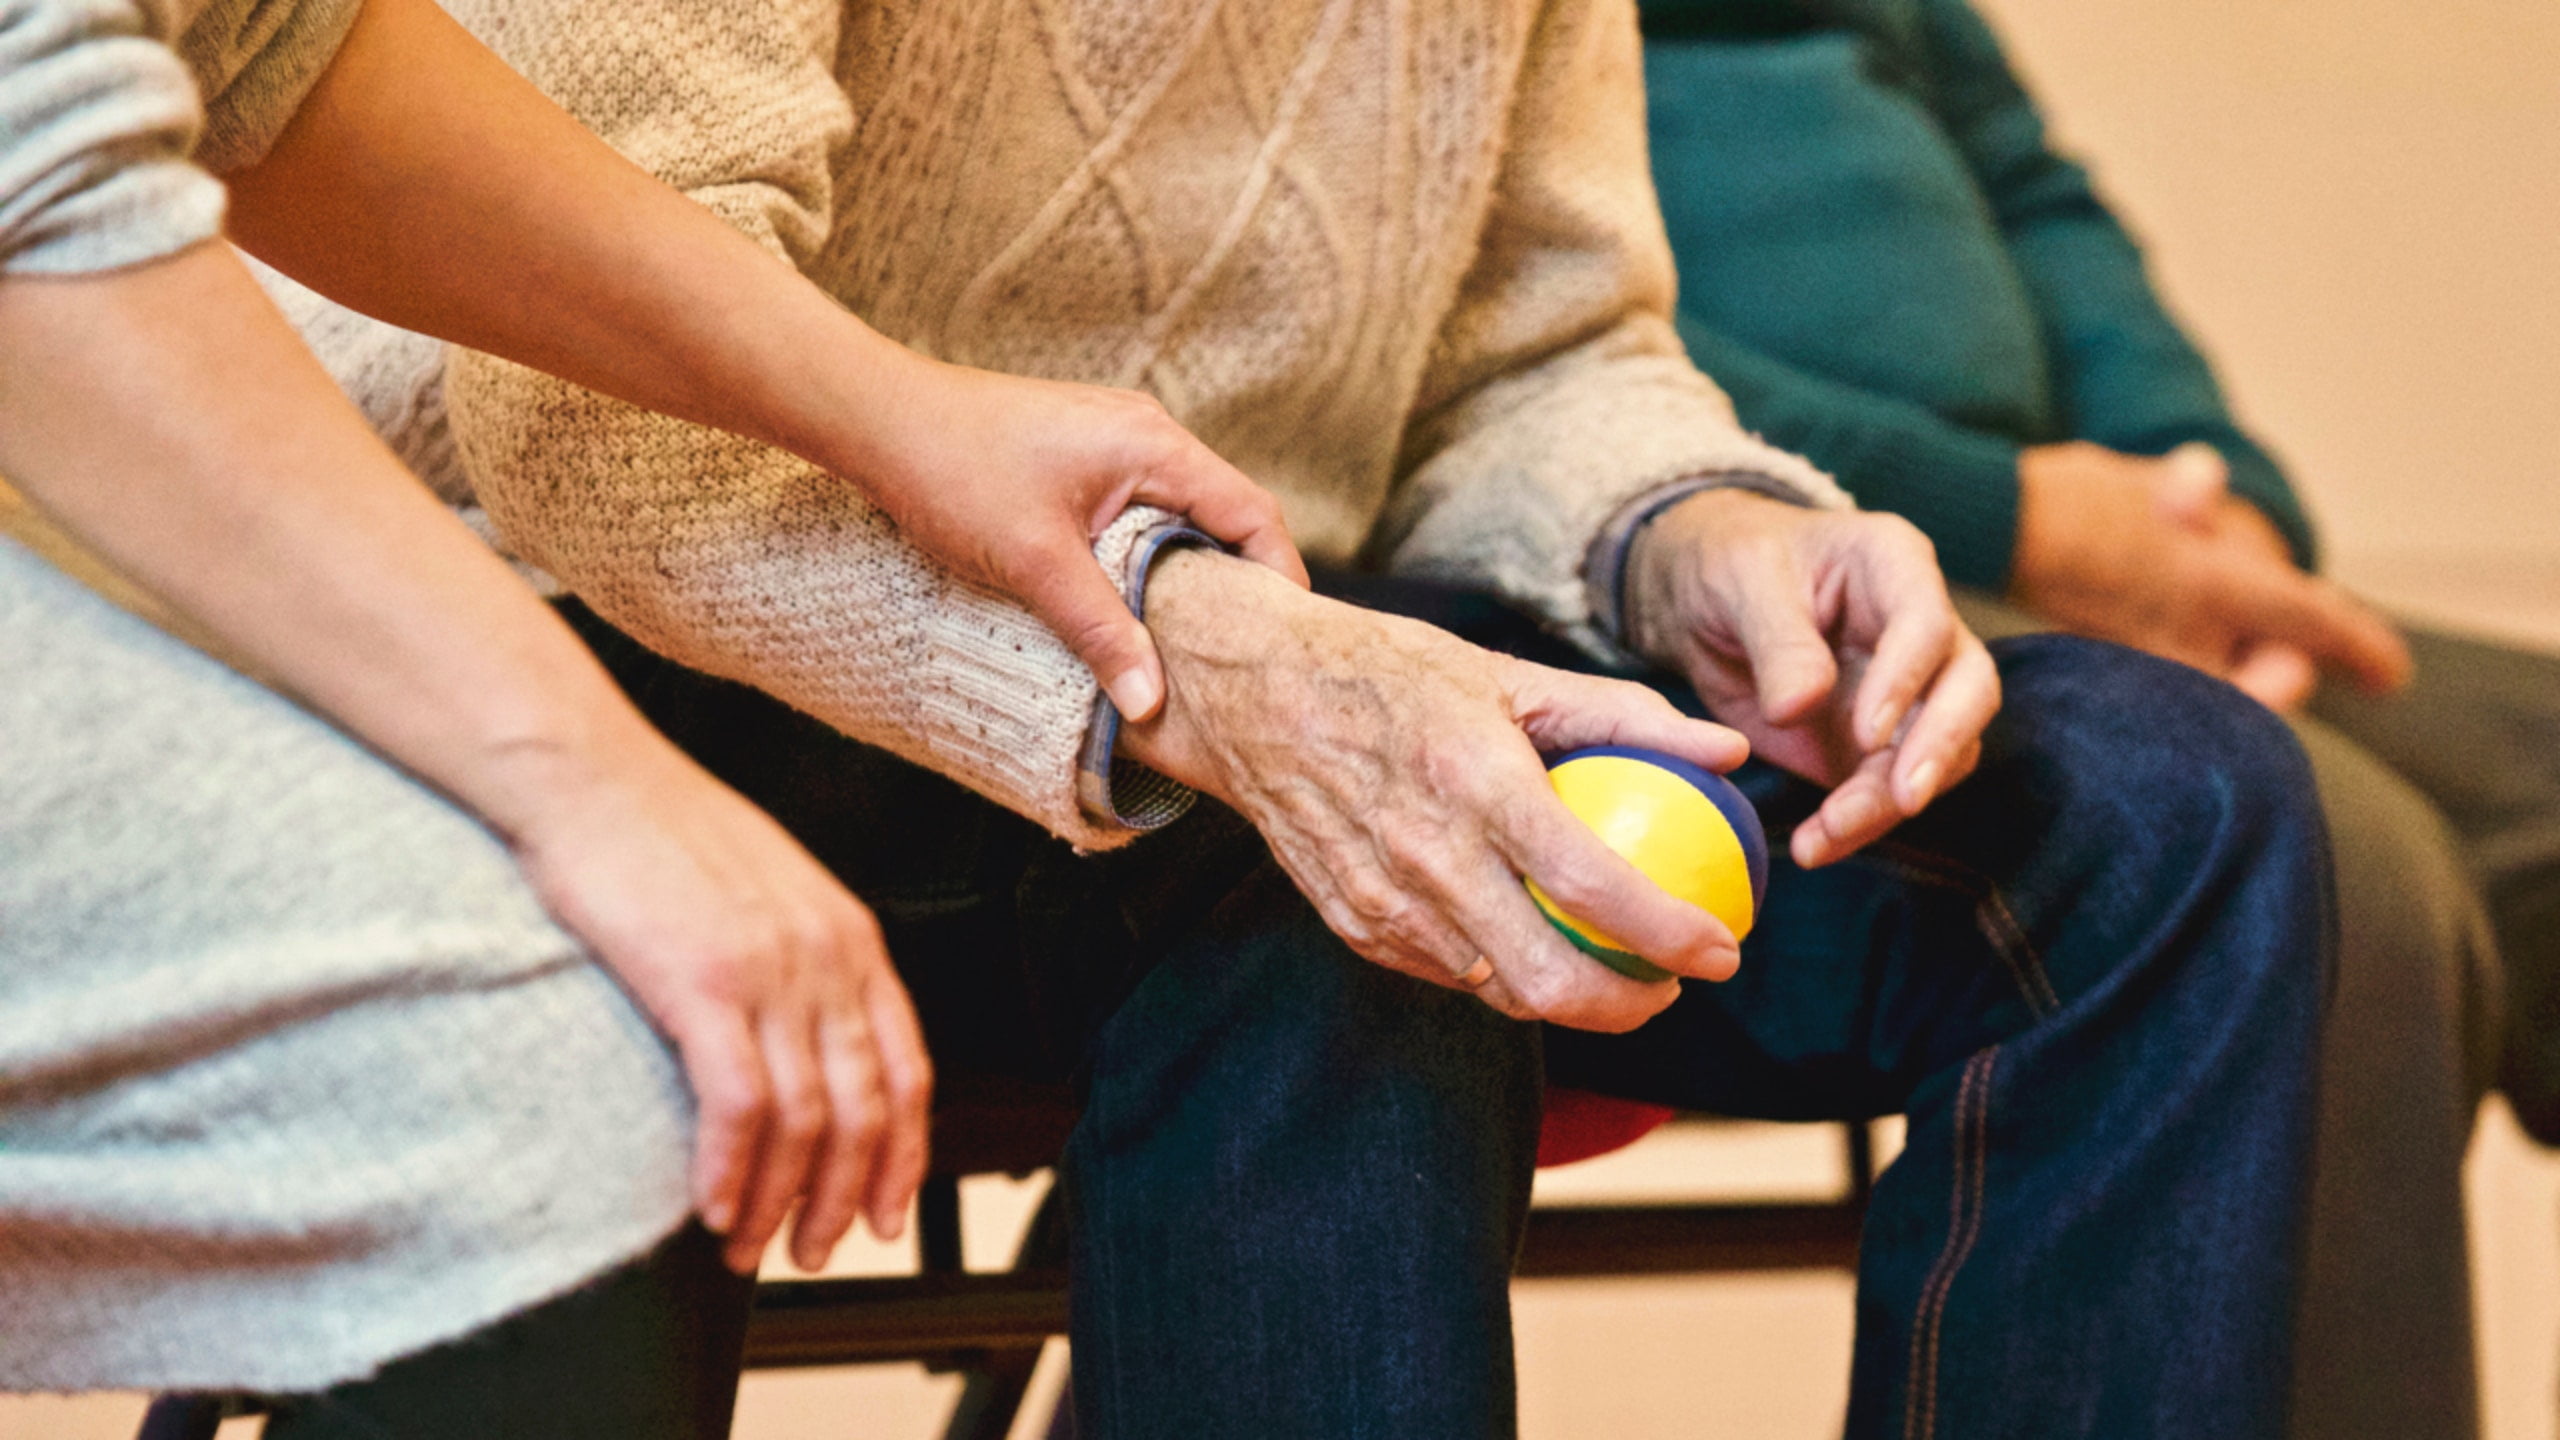 An elderly person holding a ball